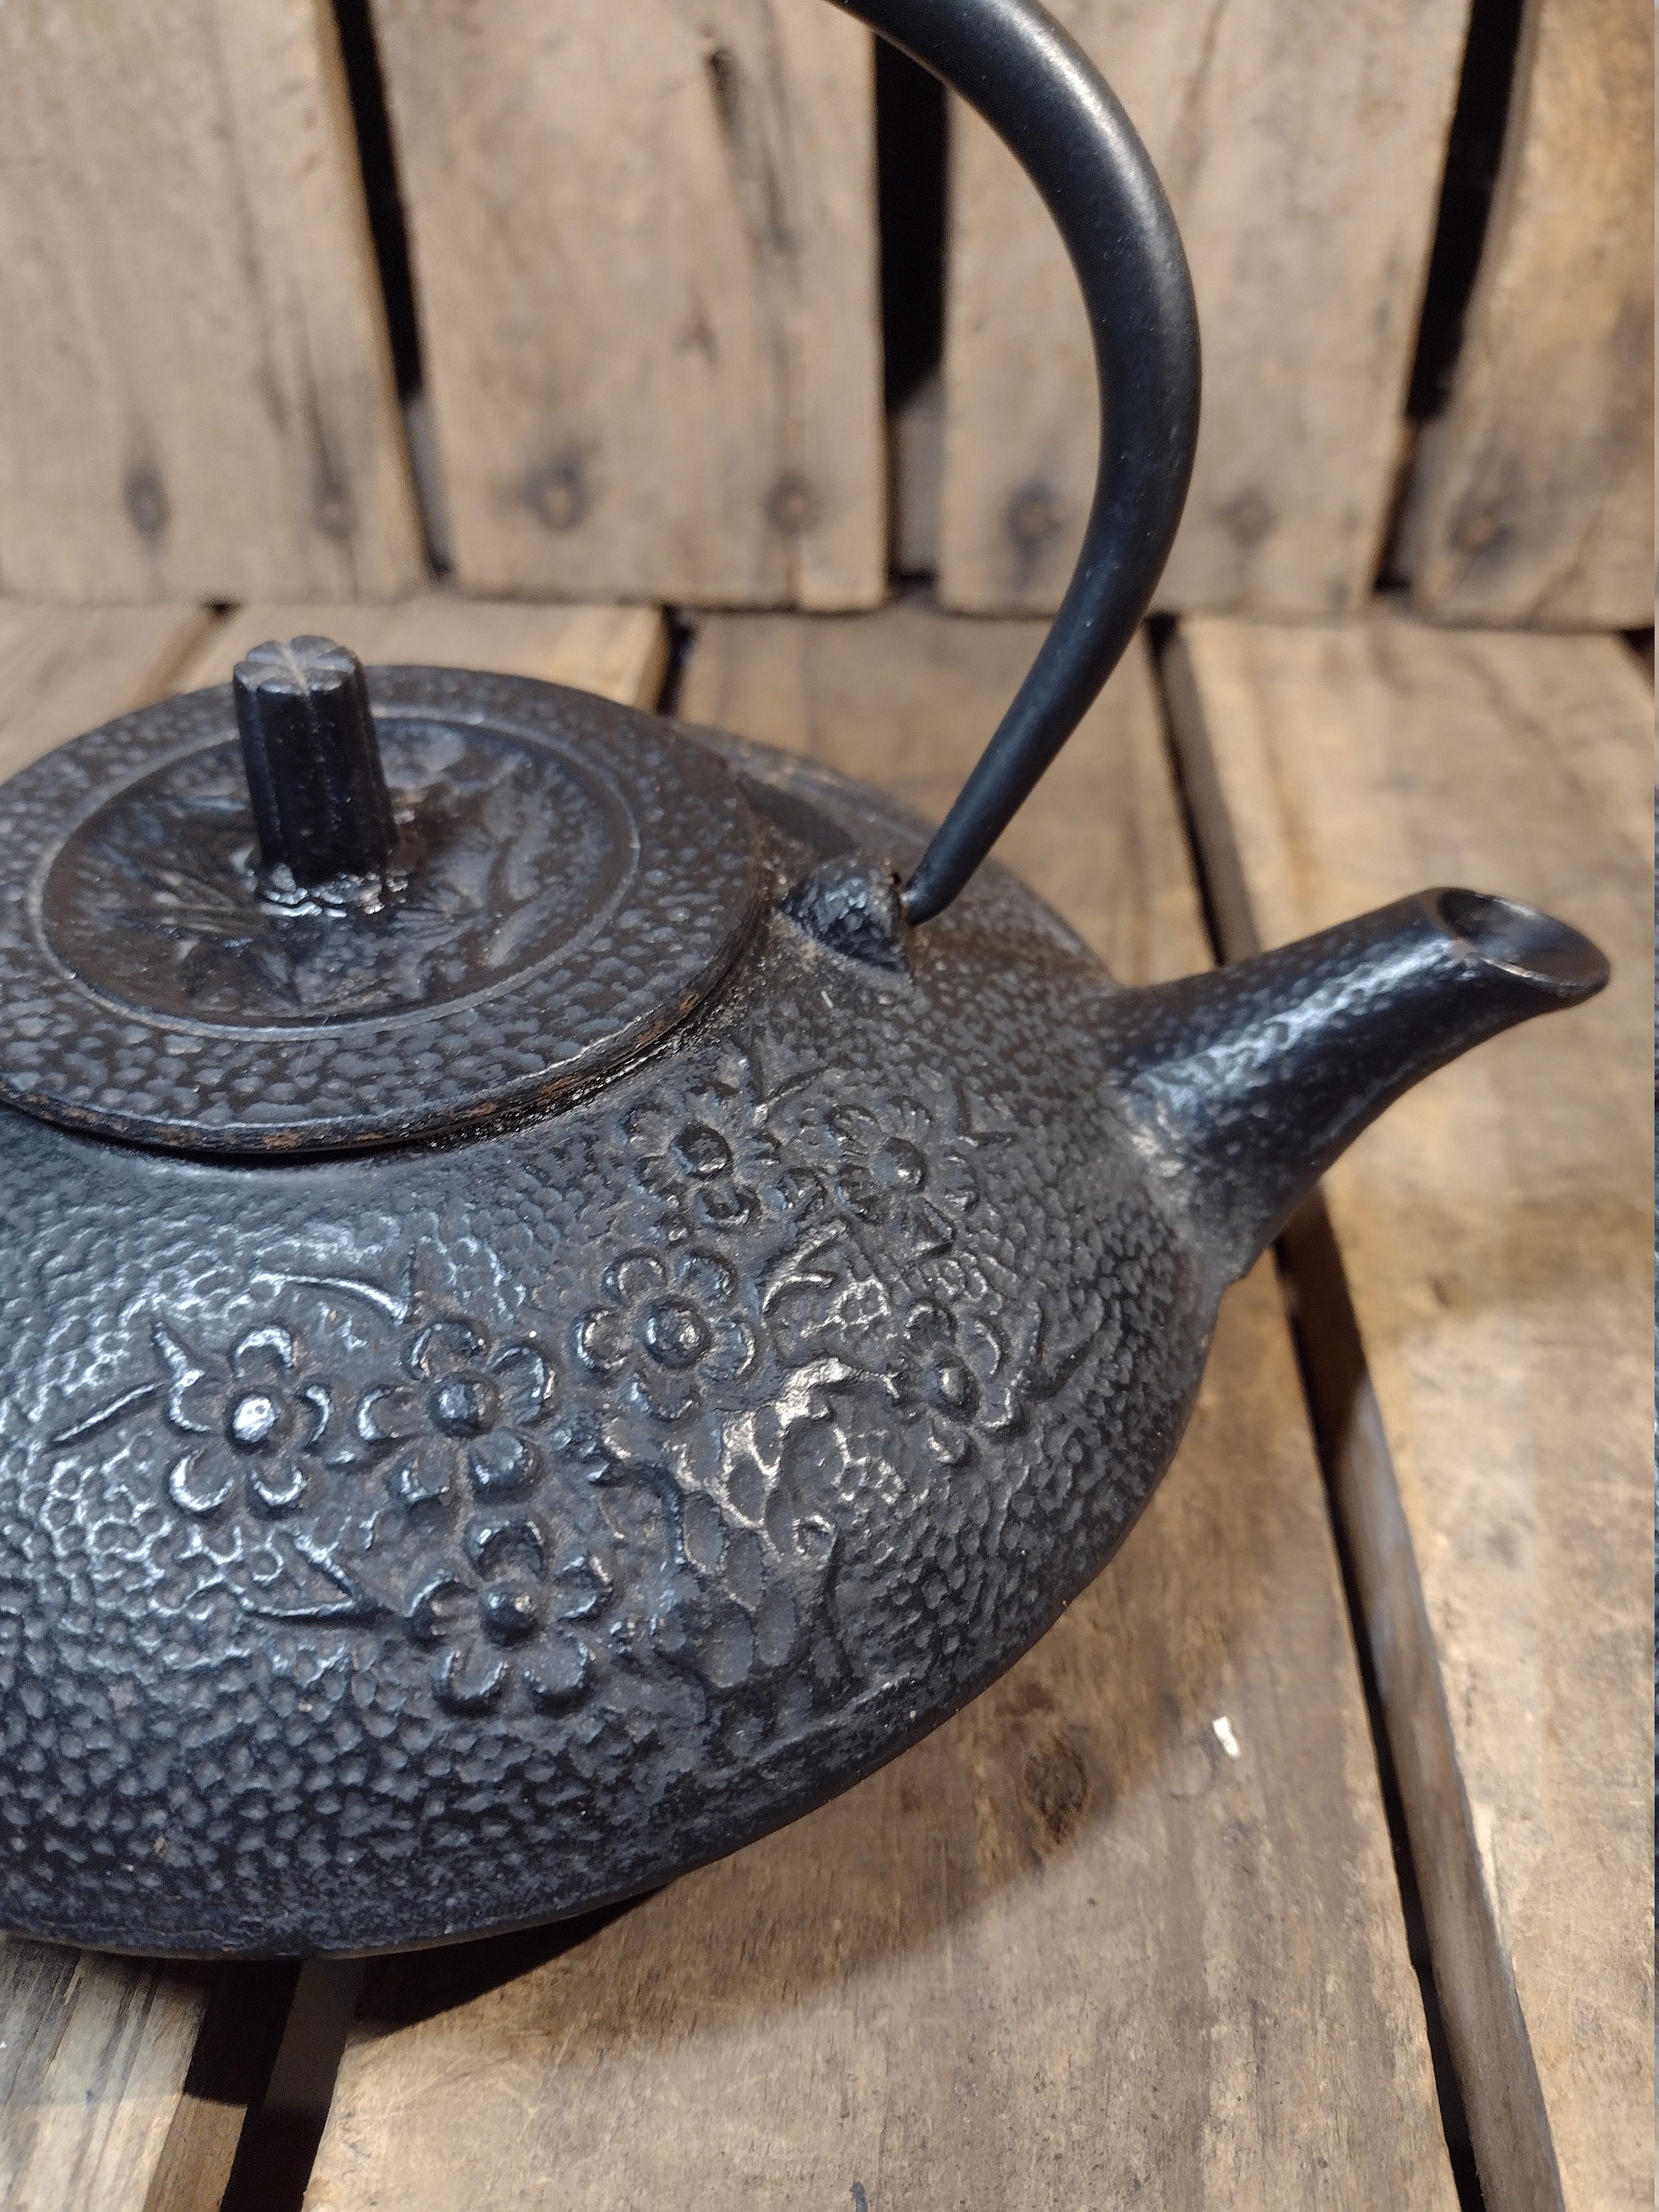 Customized Cheap Price Metal Cast Iron Tea Pot 9/10/11cm Coffee